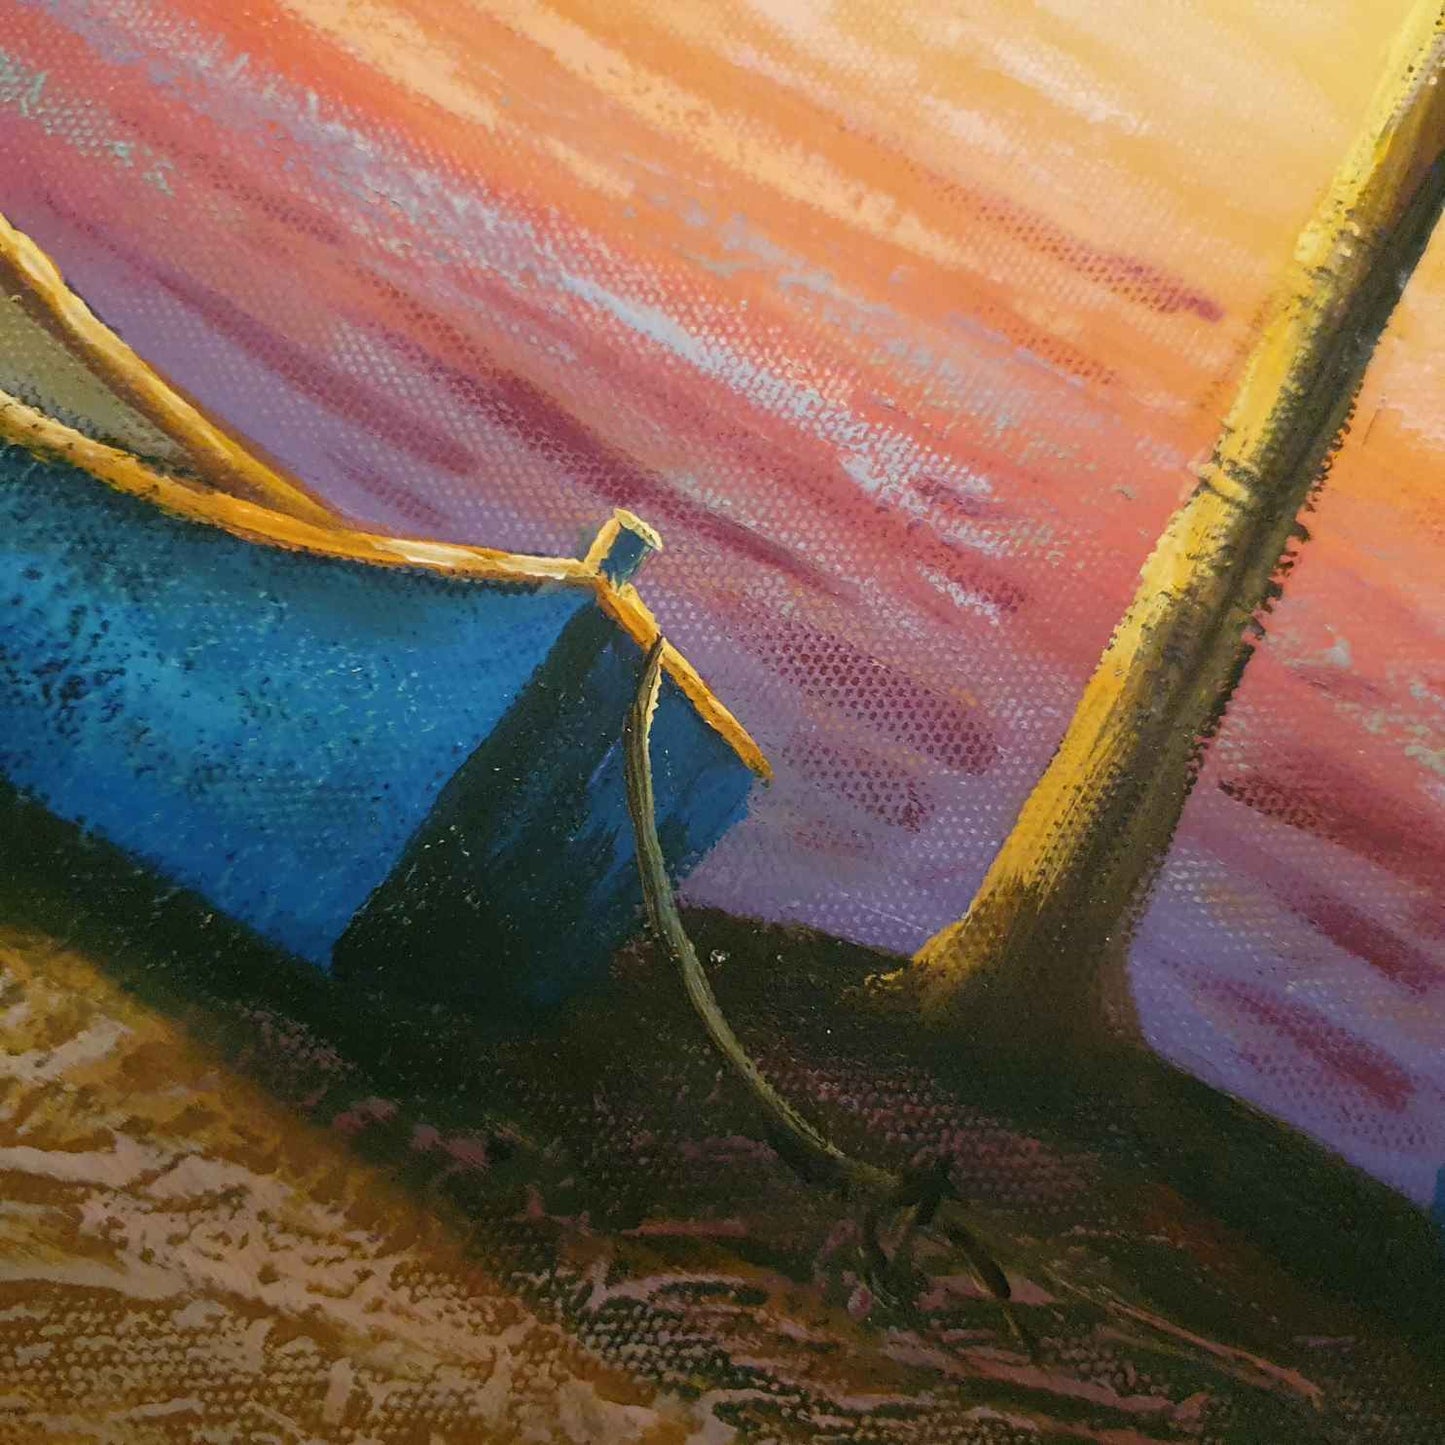 Gemälde „Palmen am Meer“ 90x60 cm